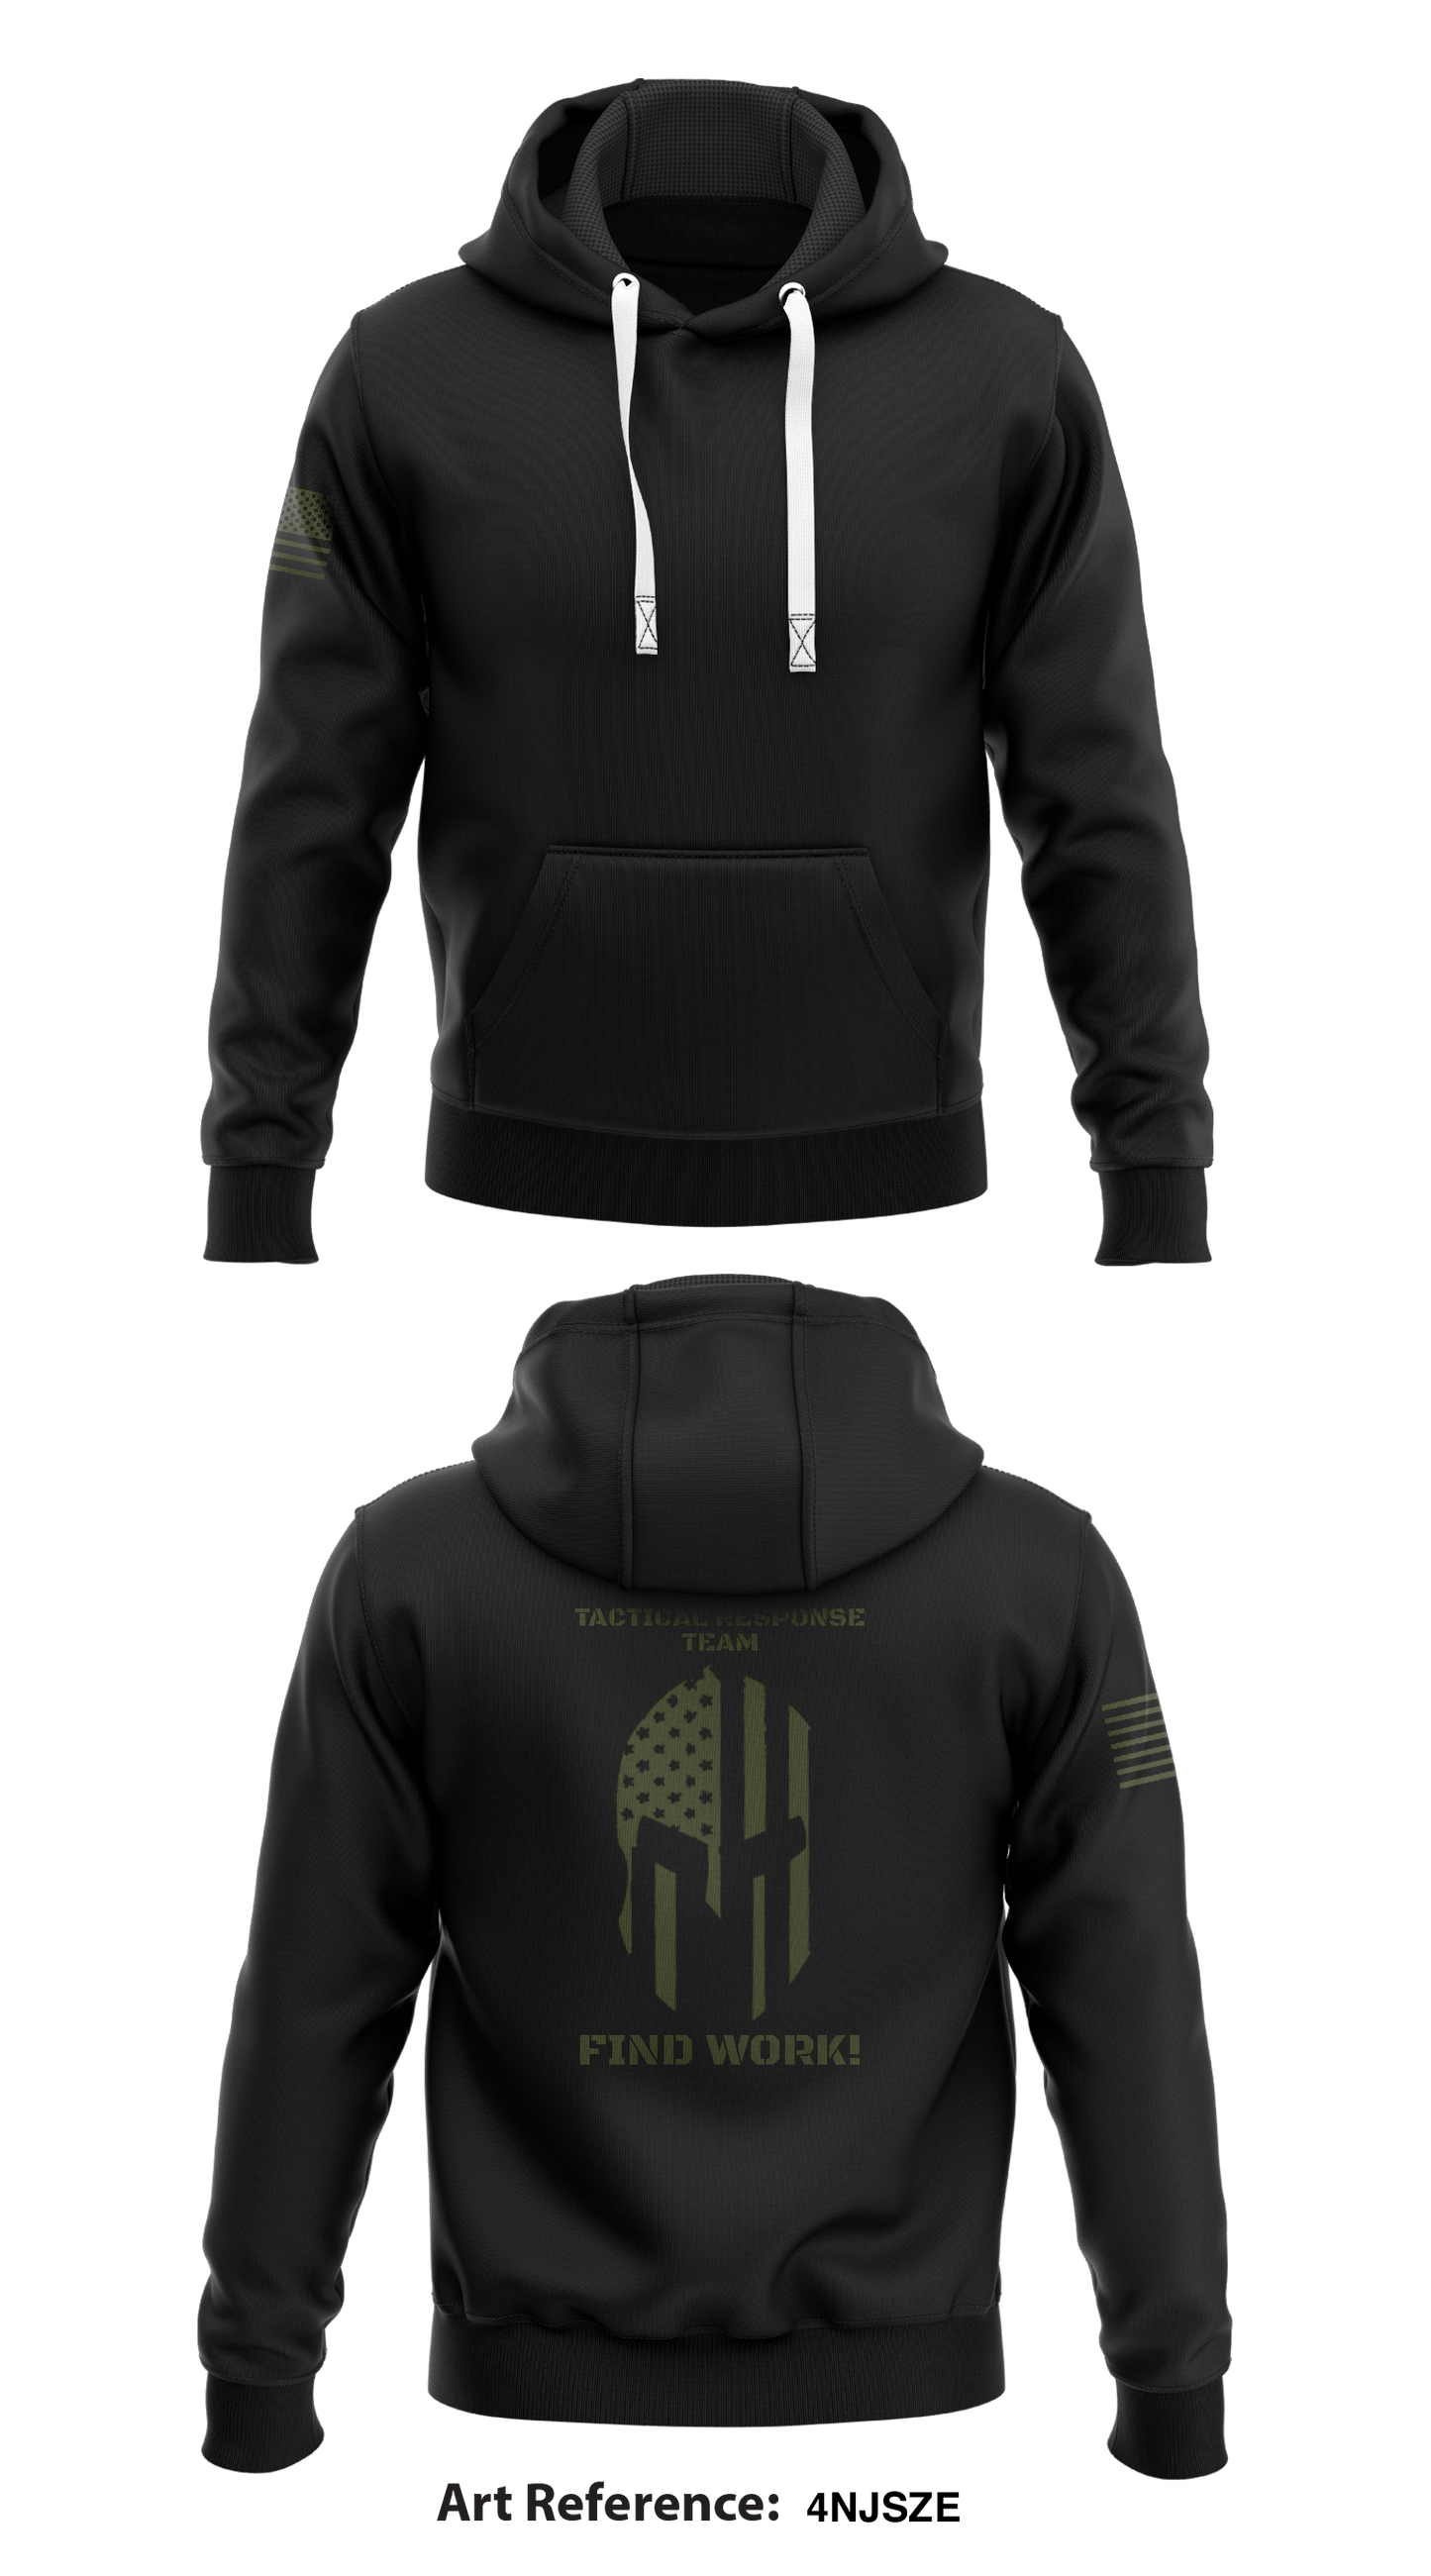 Tactical Response Team Store 1  Core Men's Hooded Performance Sweatshirt - 4nJSzE